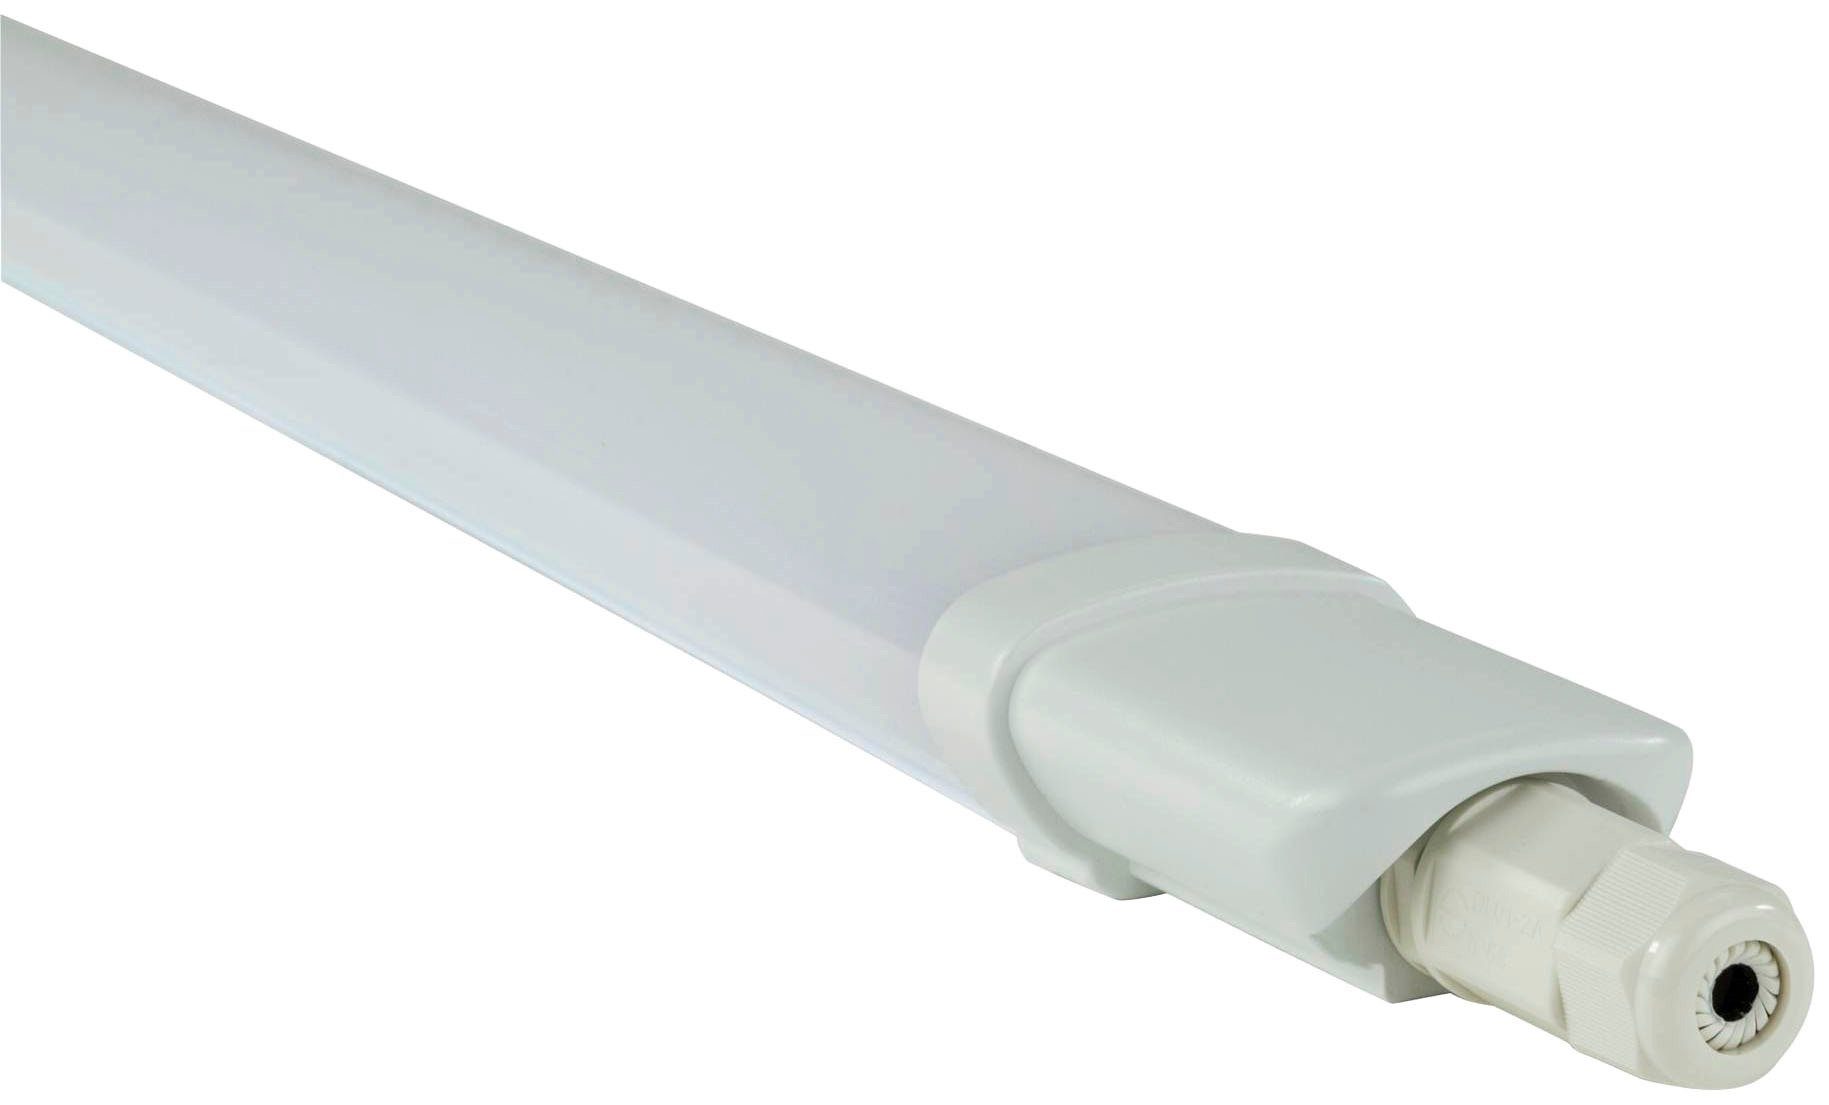 REV LED Lichtleiste SUPERSLIM, LED fest integriert, auch für Feuchträume,  45 W, inkl. Montagematerial